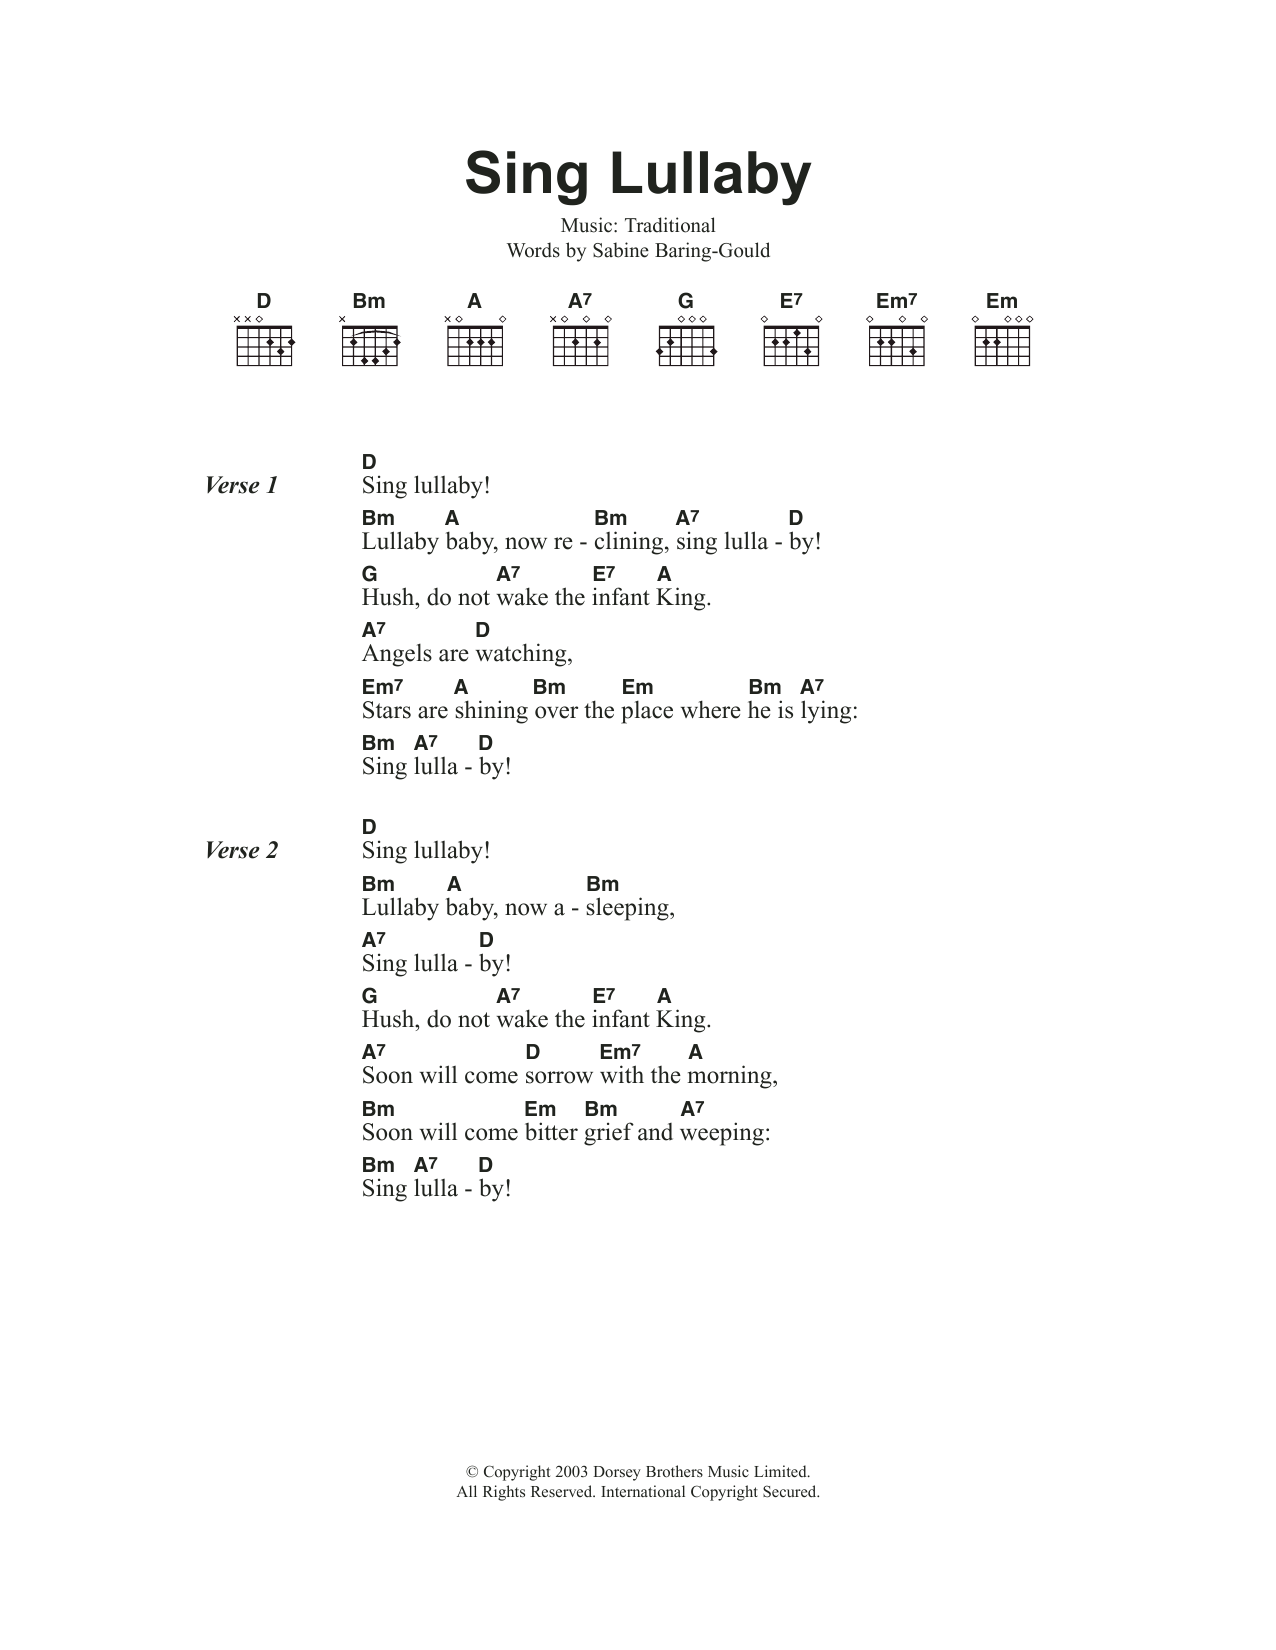 Traditional Carol Sing Lullaby Sheet Music Notes & Chords for Guitar Chords/Lyrics - Download or Print PDF